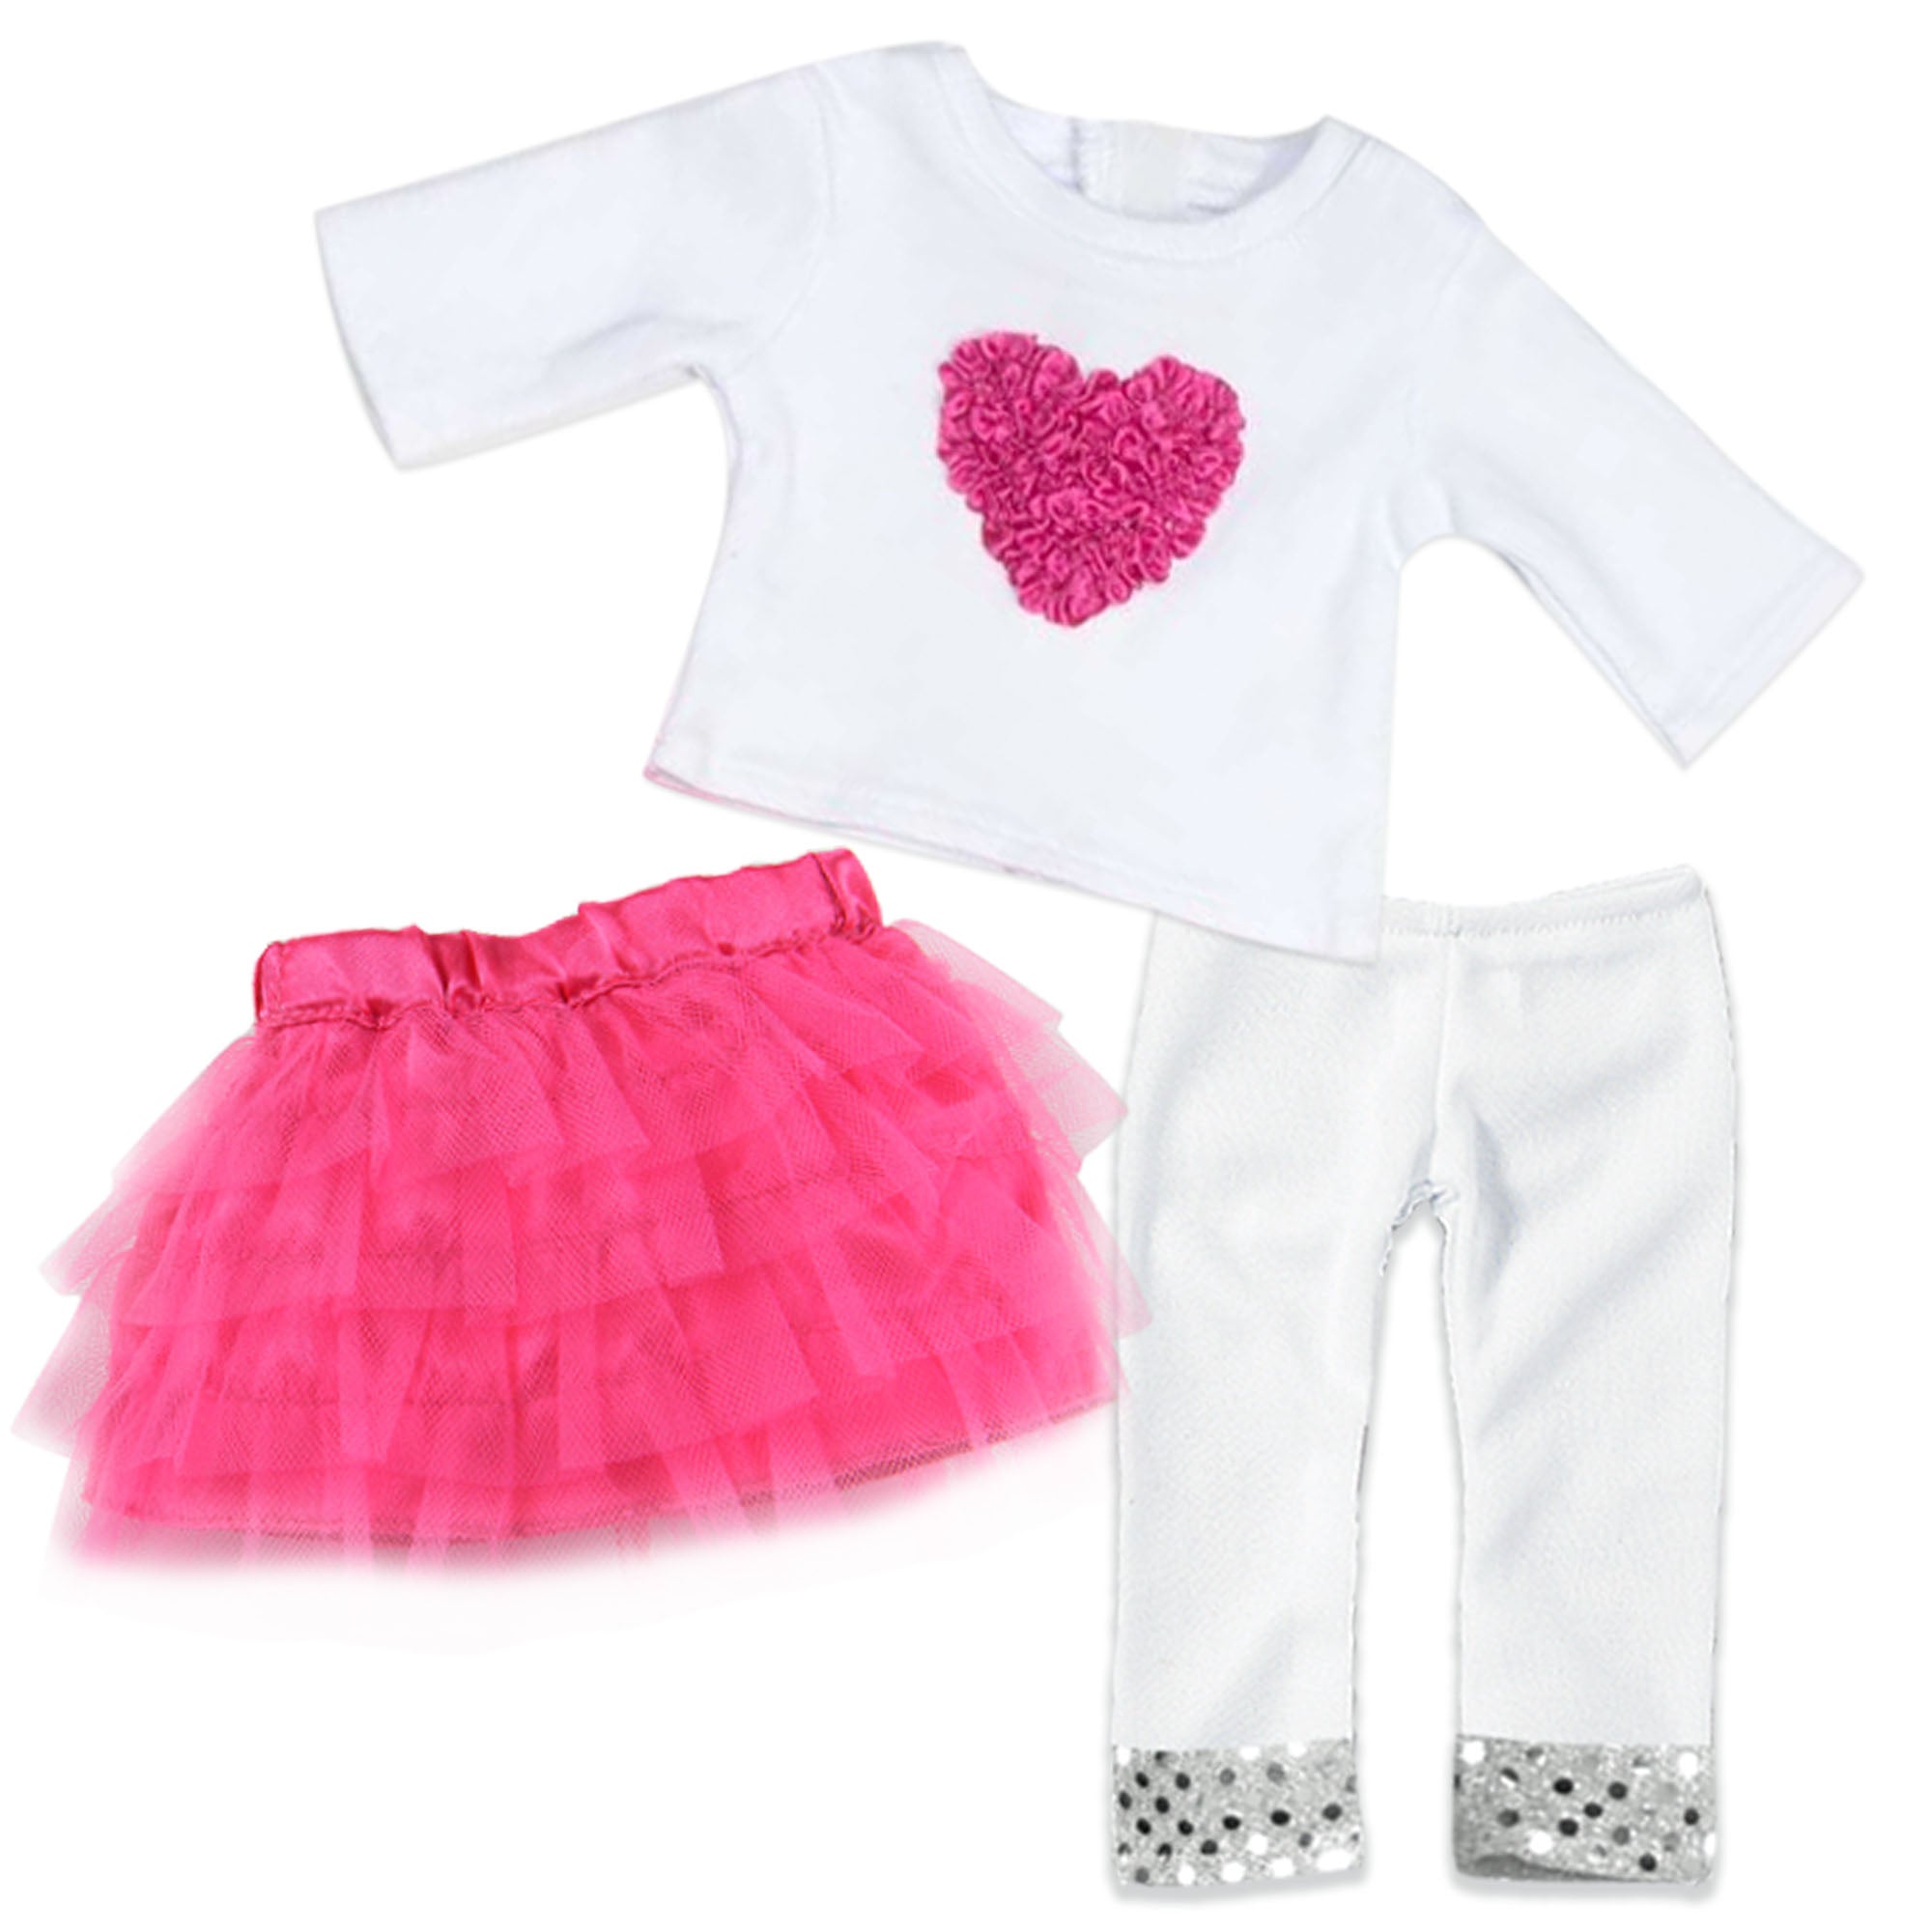 Sophia’s Long-Sleeved Heart Tee, Tutu Tulle Skirt, & Sequin-Trimmed Leggings Complete Outfit Set for 18” Dolls, Hot Pink/White